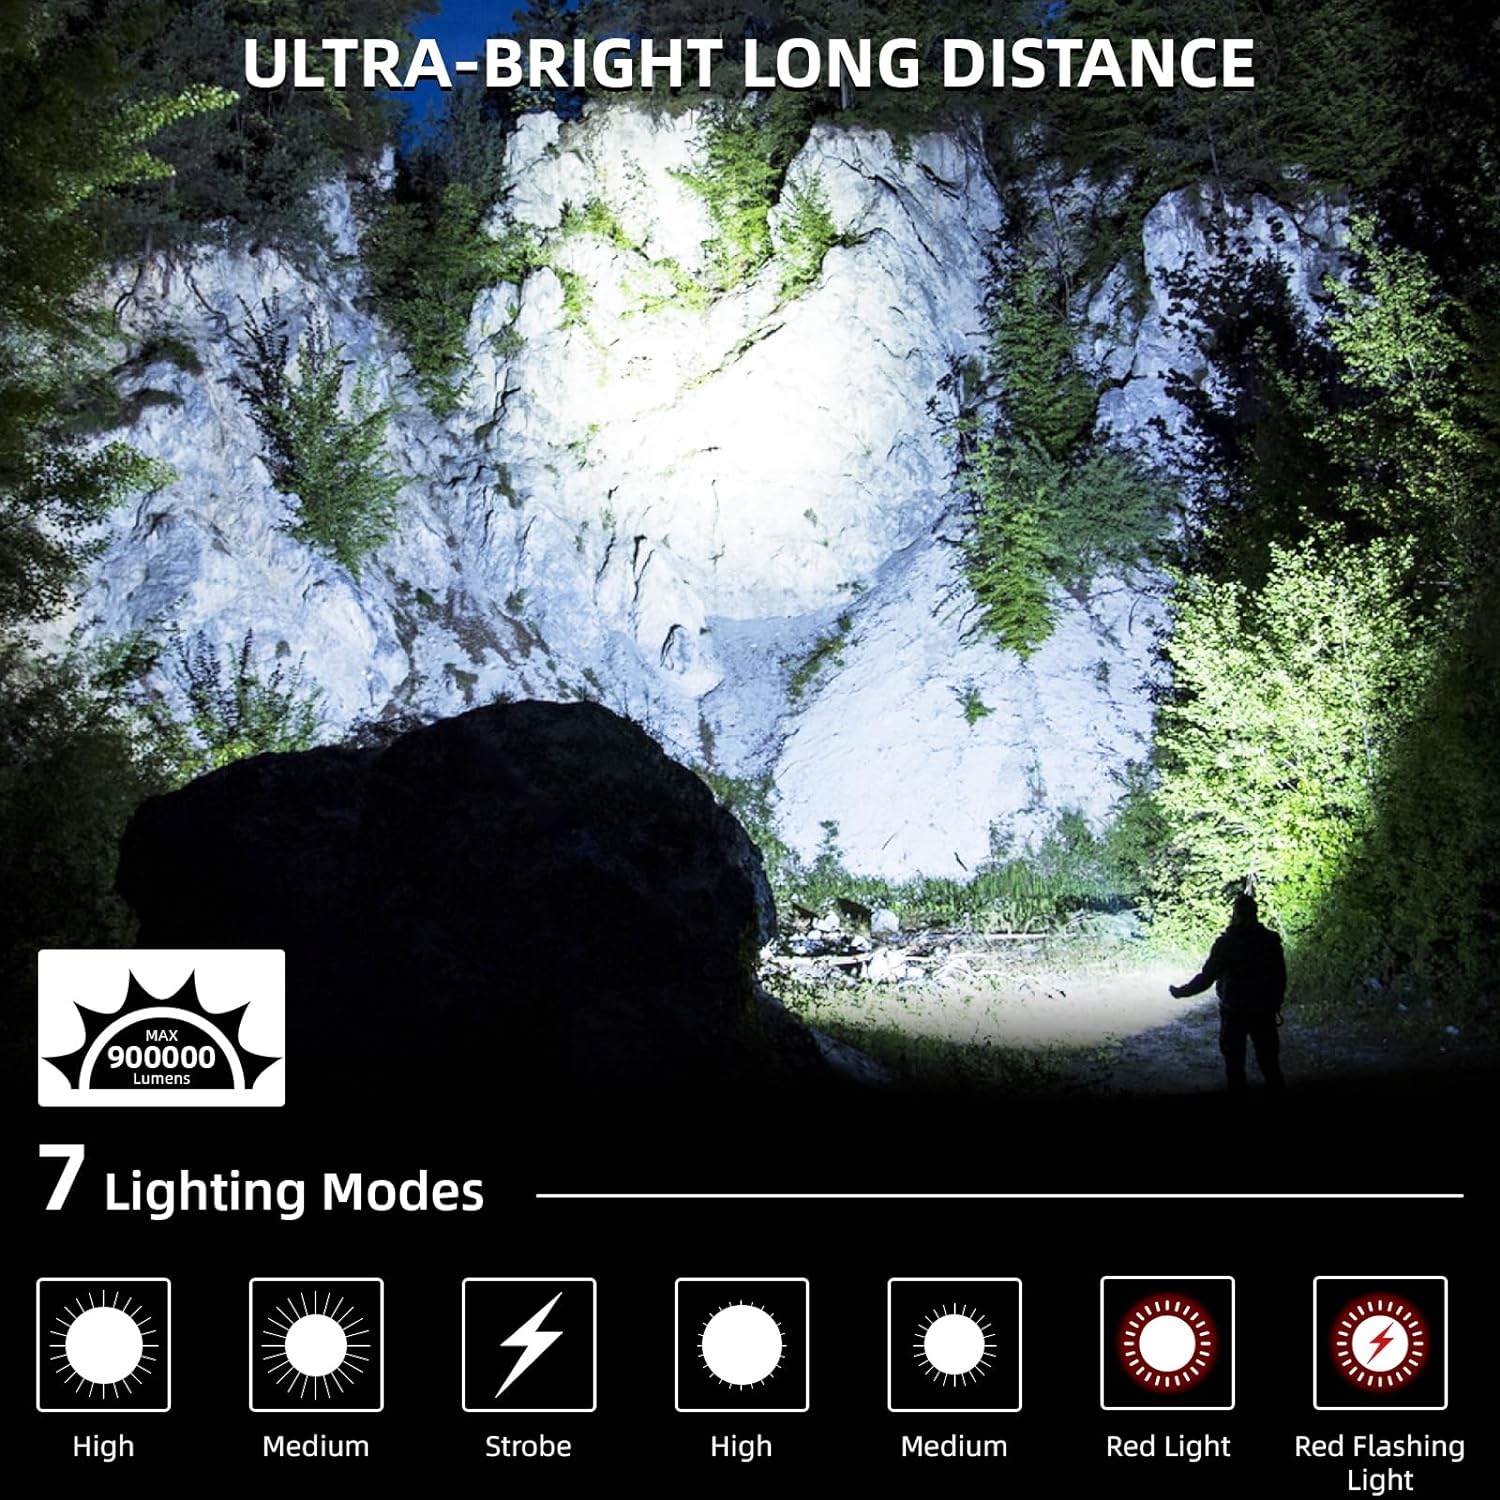 High Lumen Rechargeable Flashlight - 900,000 Lumen LED Flashlight